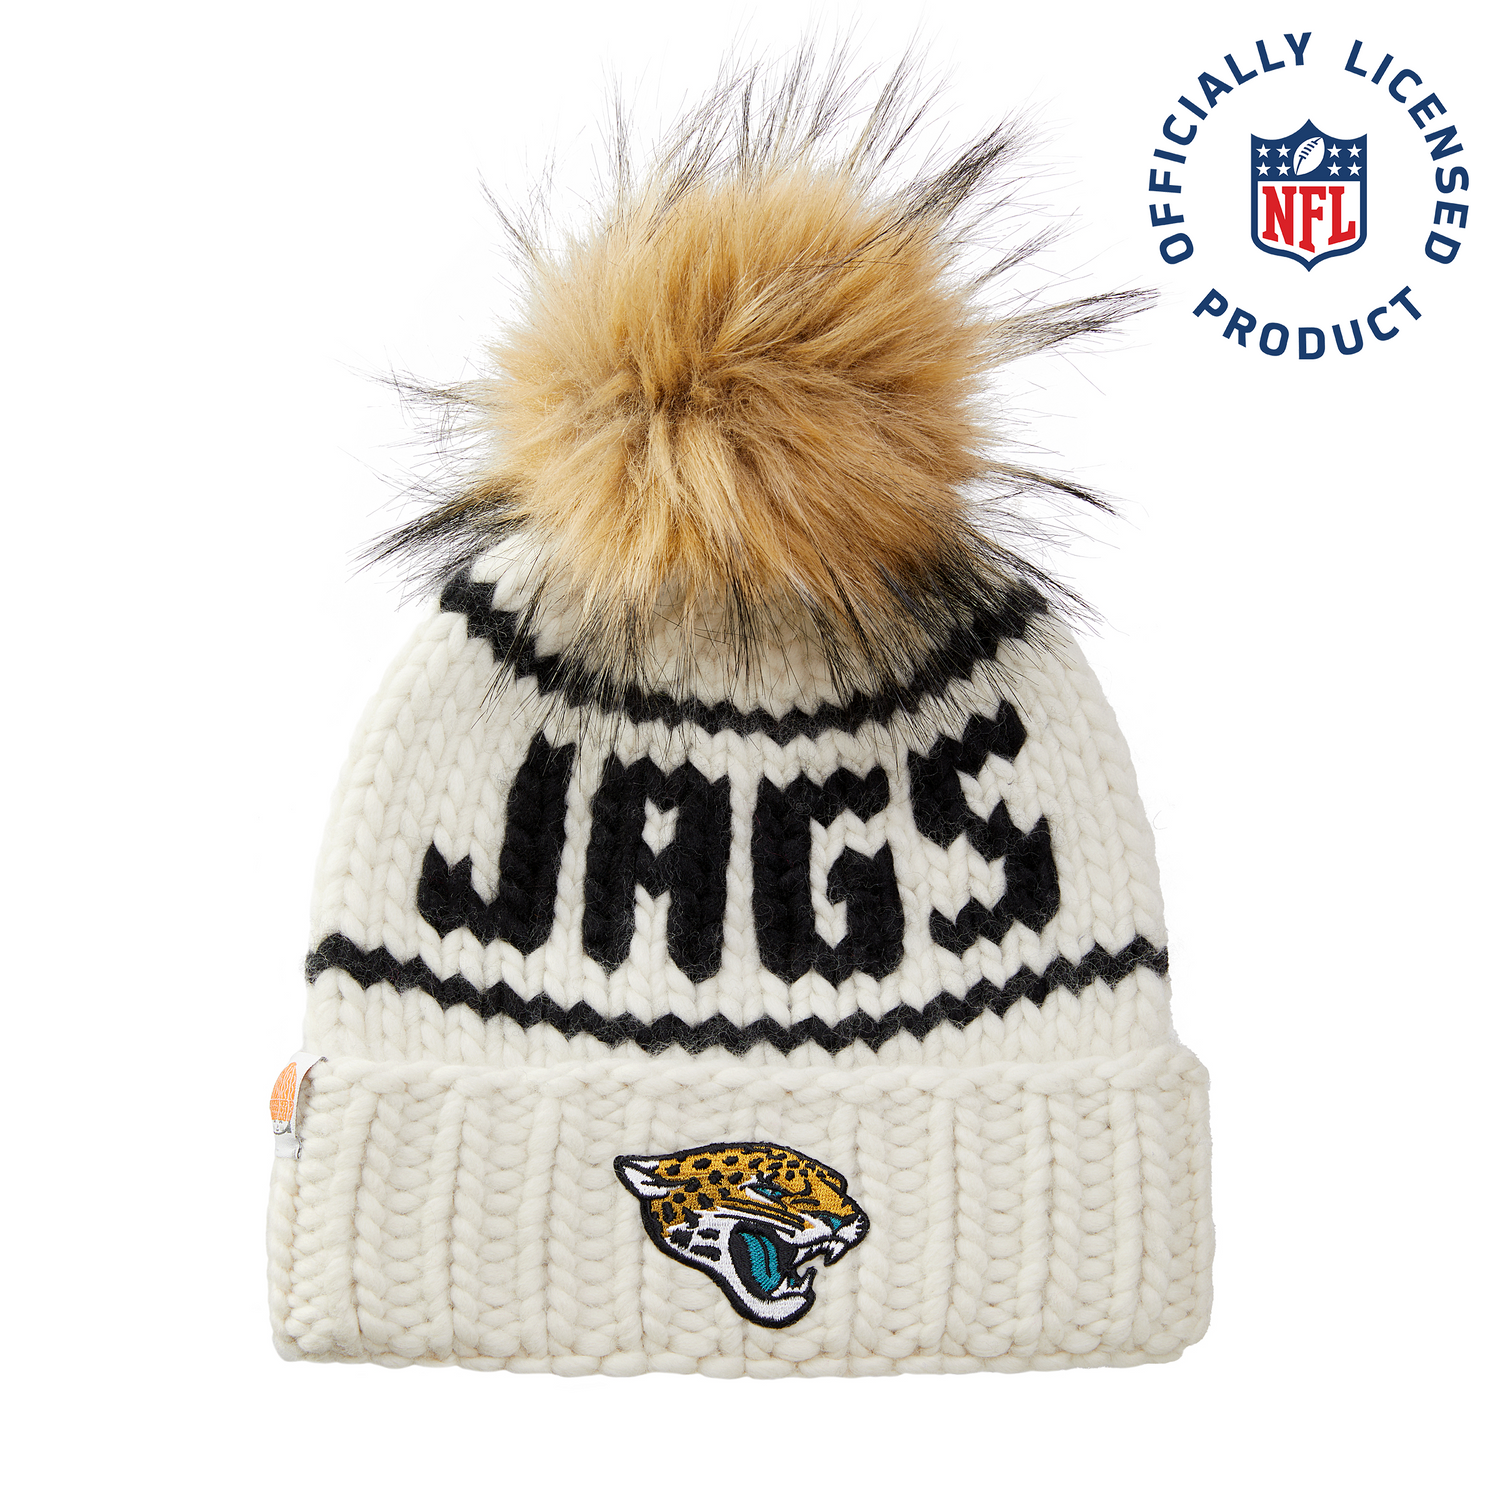 jaguars winter hat